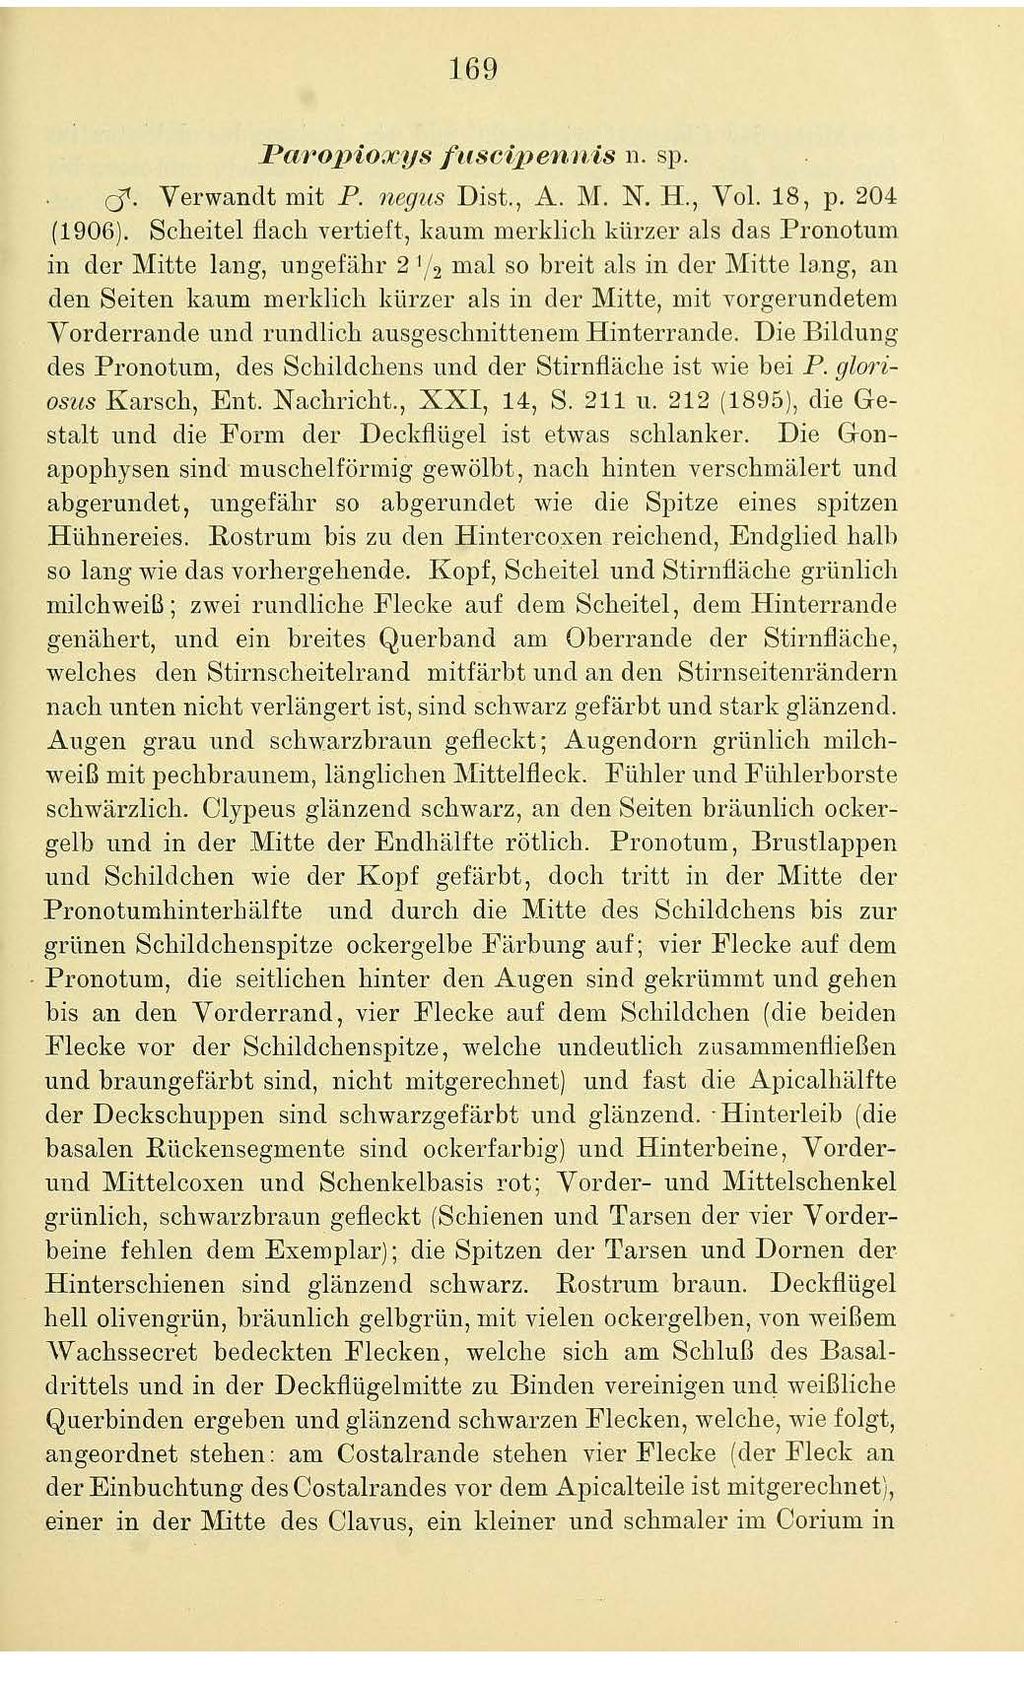 169 Pa1"01Jioxys fitsci1jen1tis 11. sp. cf. Verwancltmit P. 1iegits Dist., A. M. N. H., Vol.18, p. 204 (1906).